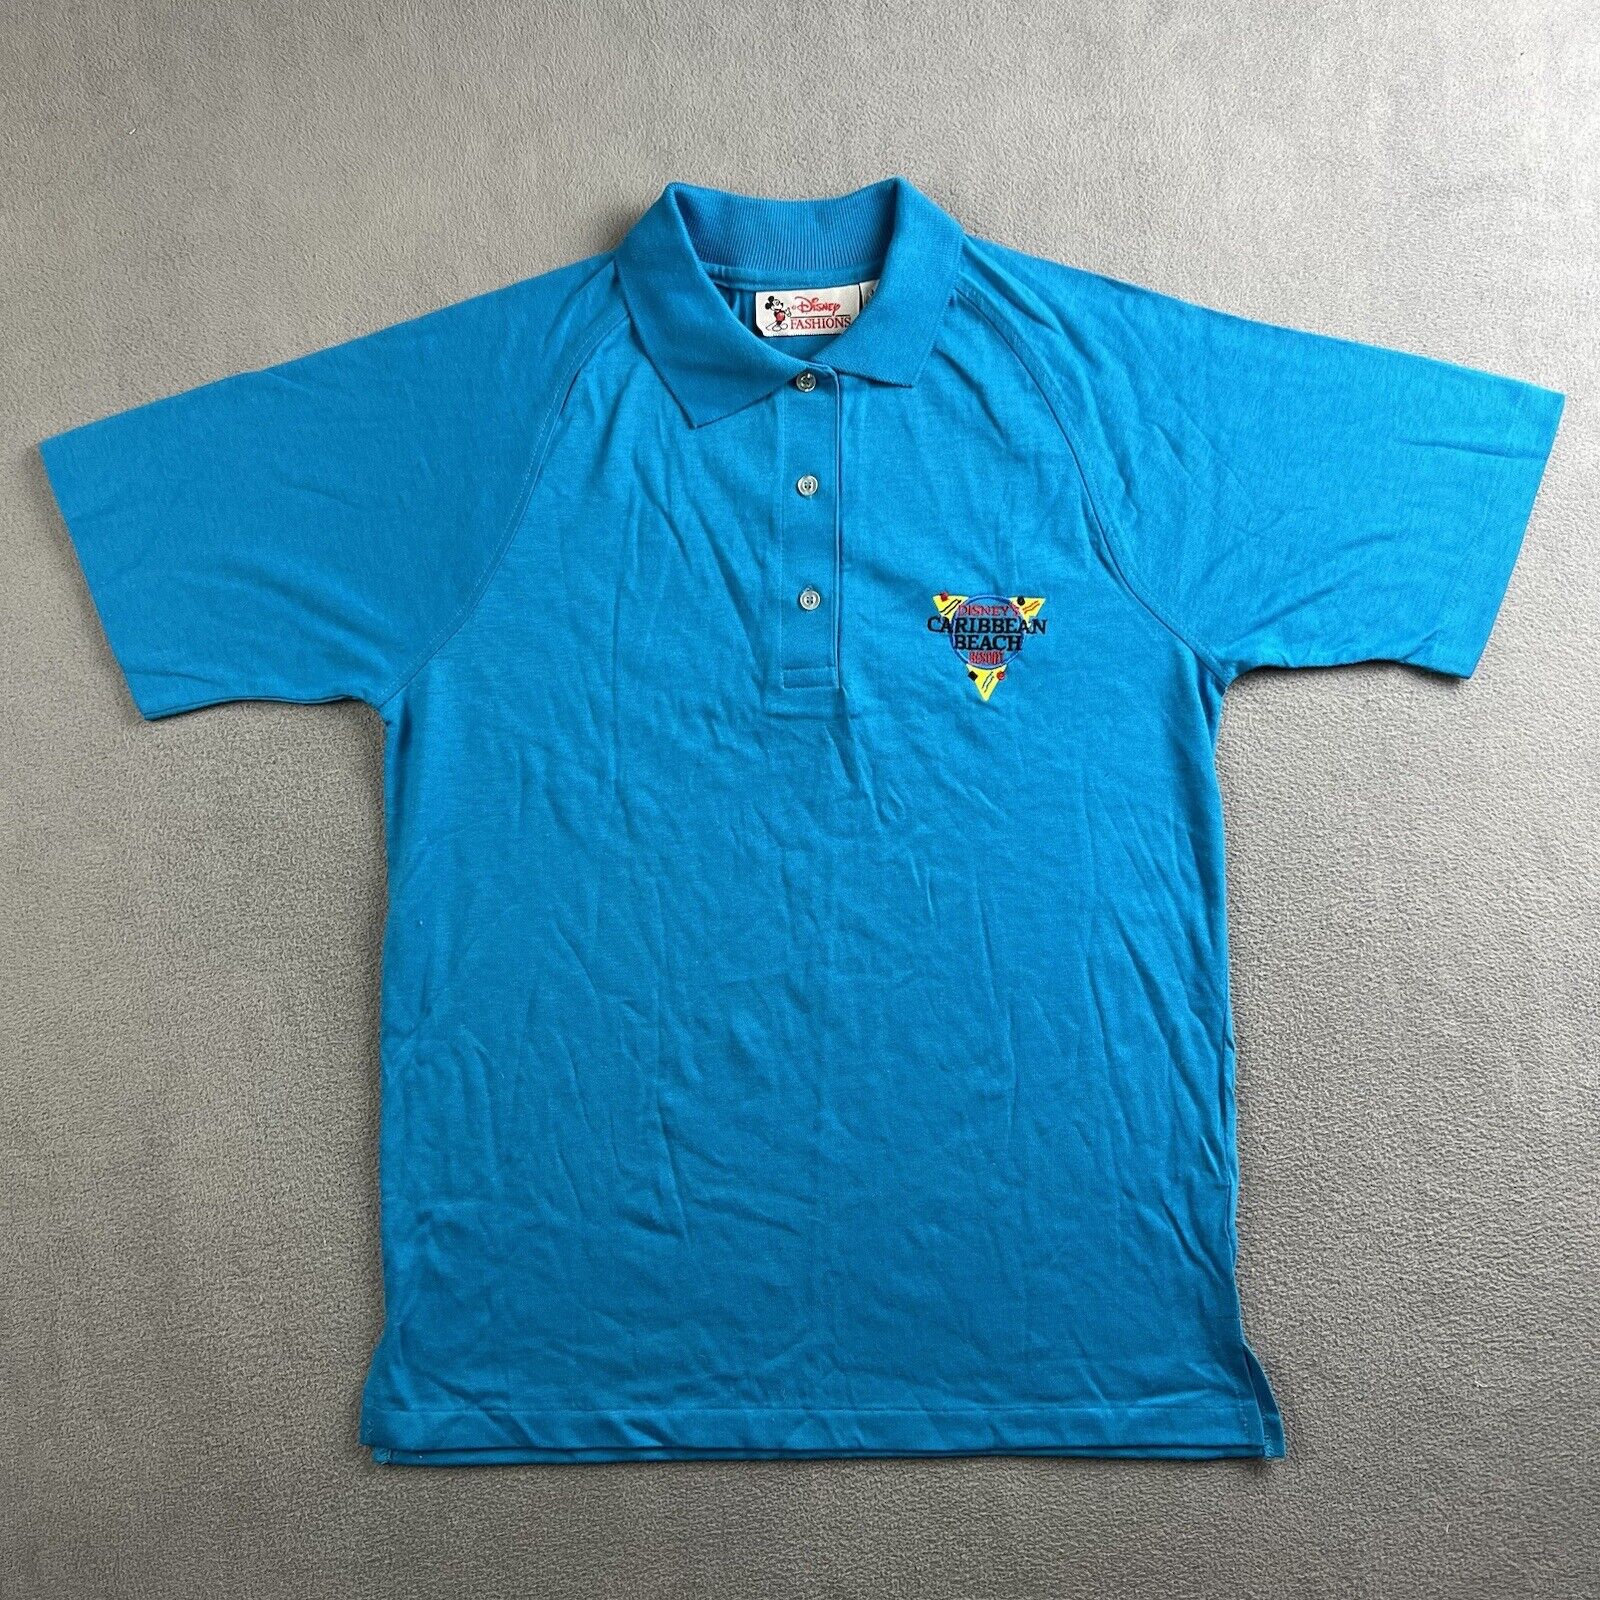 Vintage Disney Shirt Adult Medium Turquoise Blue Caribbean Beach Resort USA Made